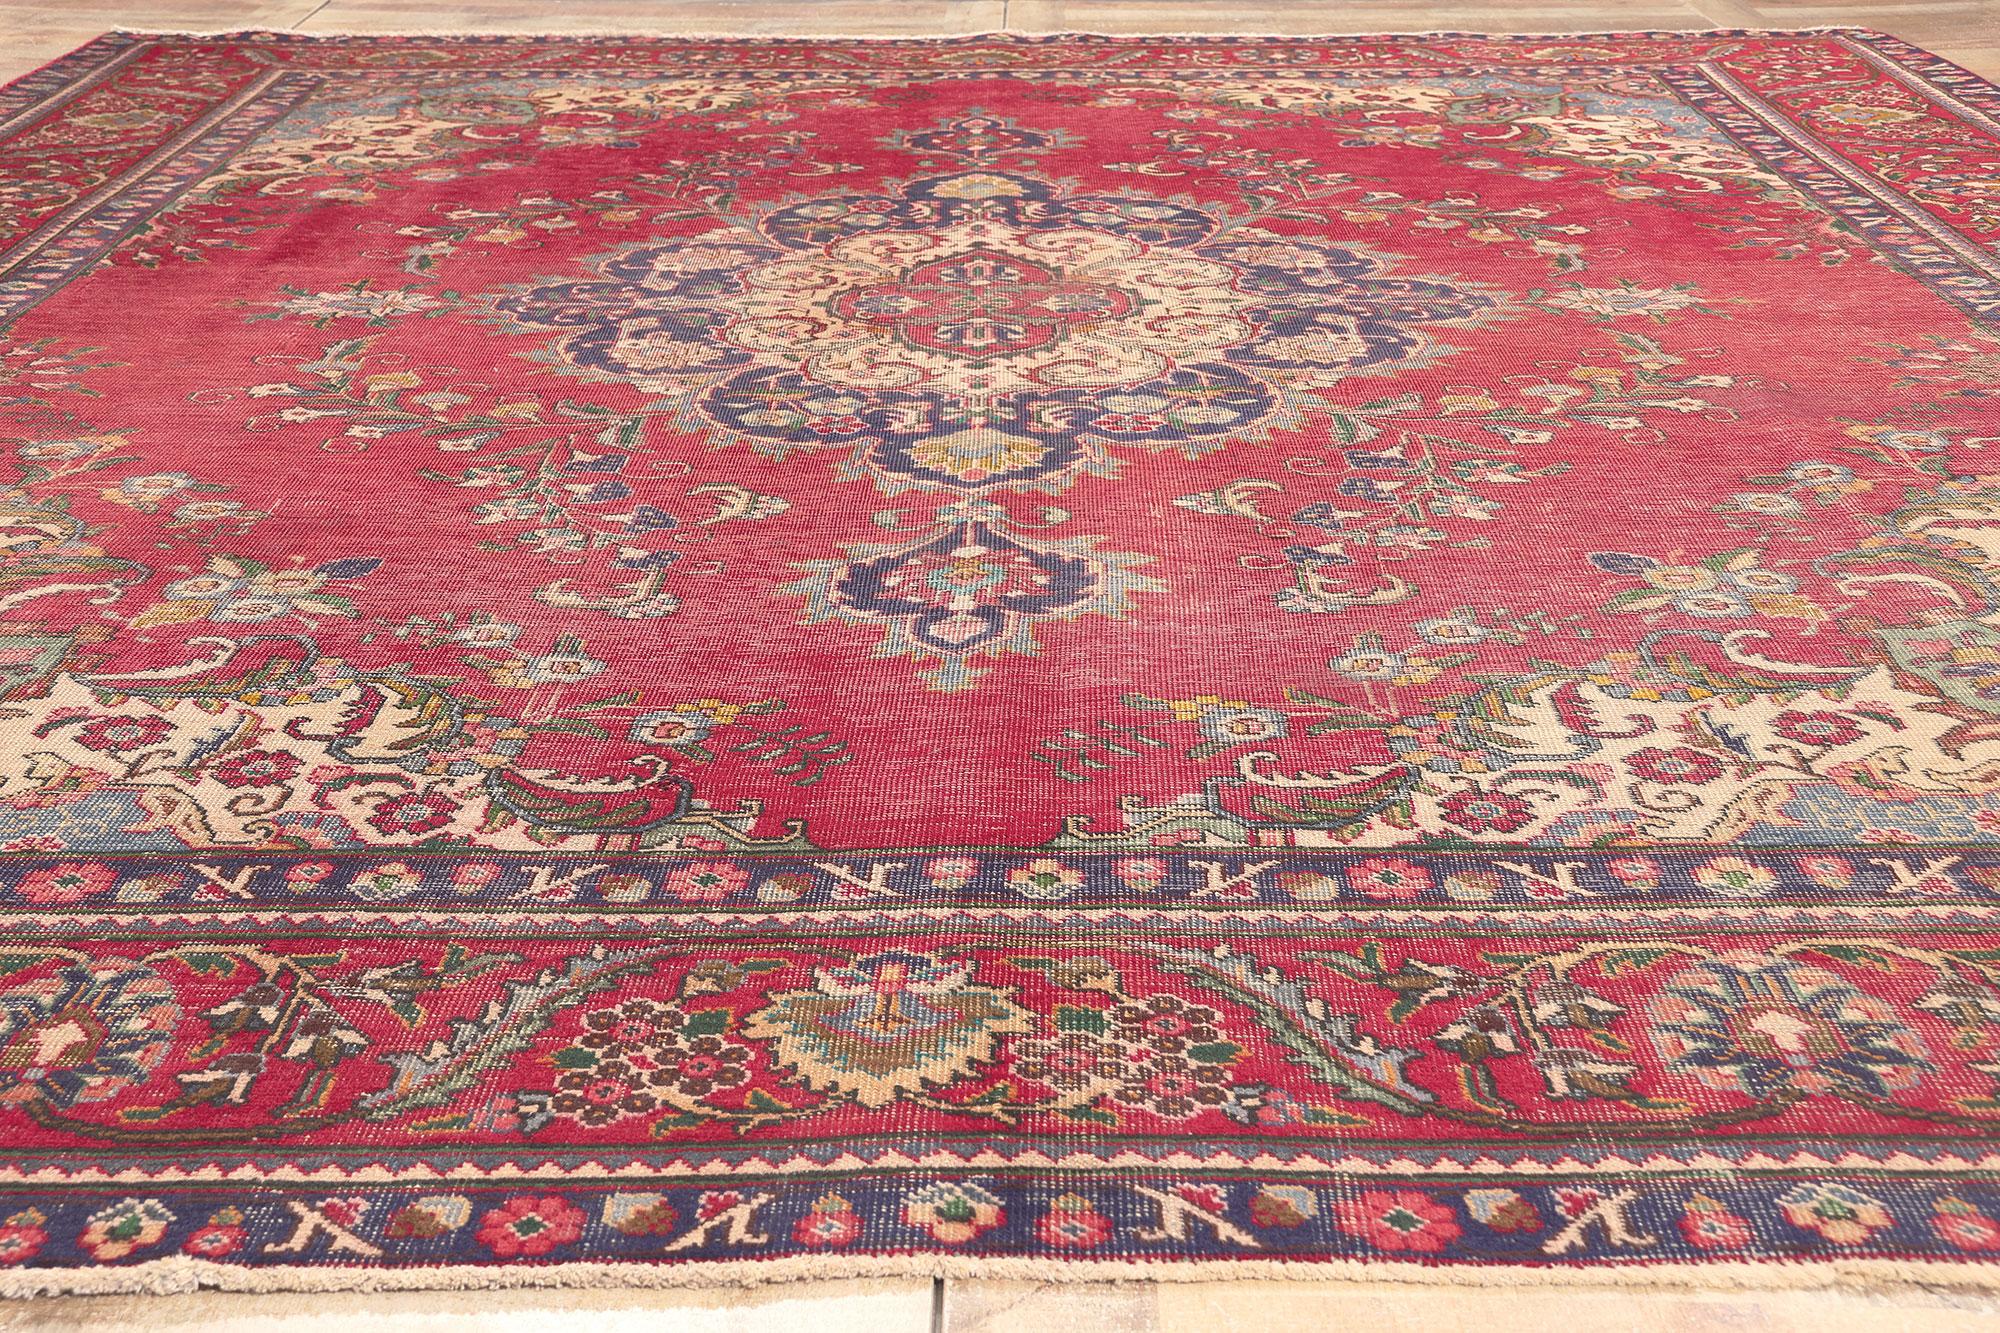 Antique-Worn Persian Tabriz Rug, Rustic Sensibility Meets Nostalgic Charm For Sale 2